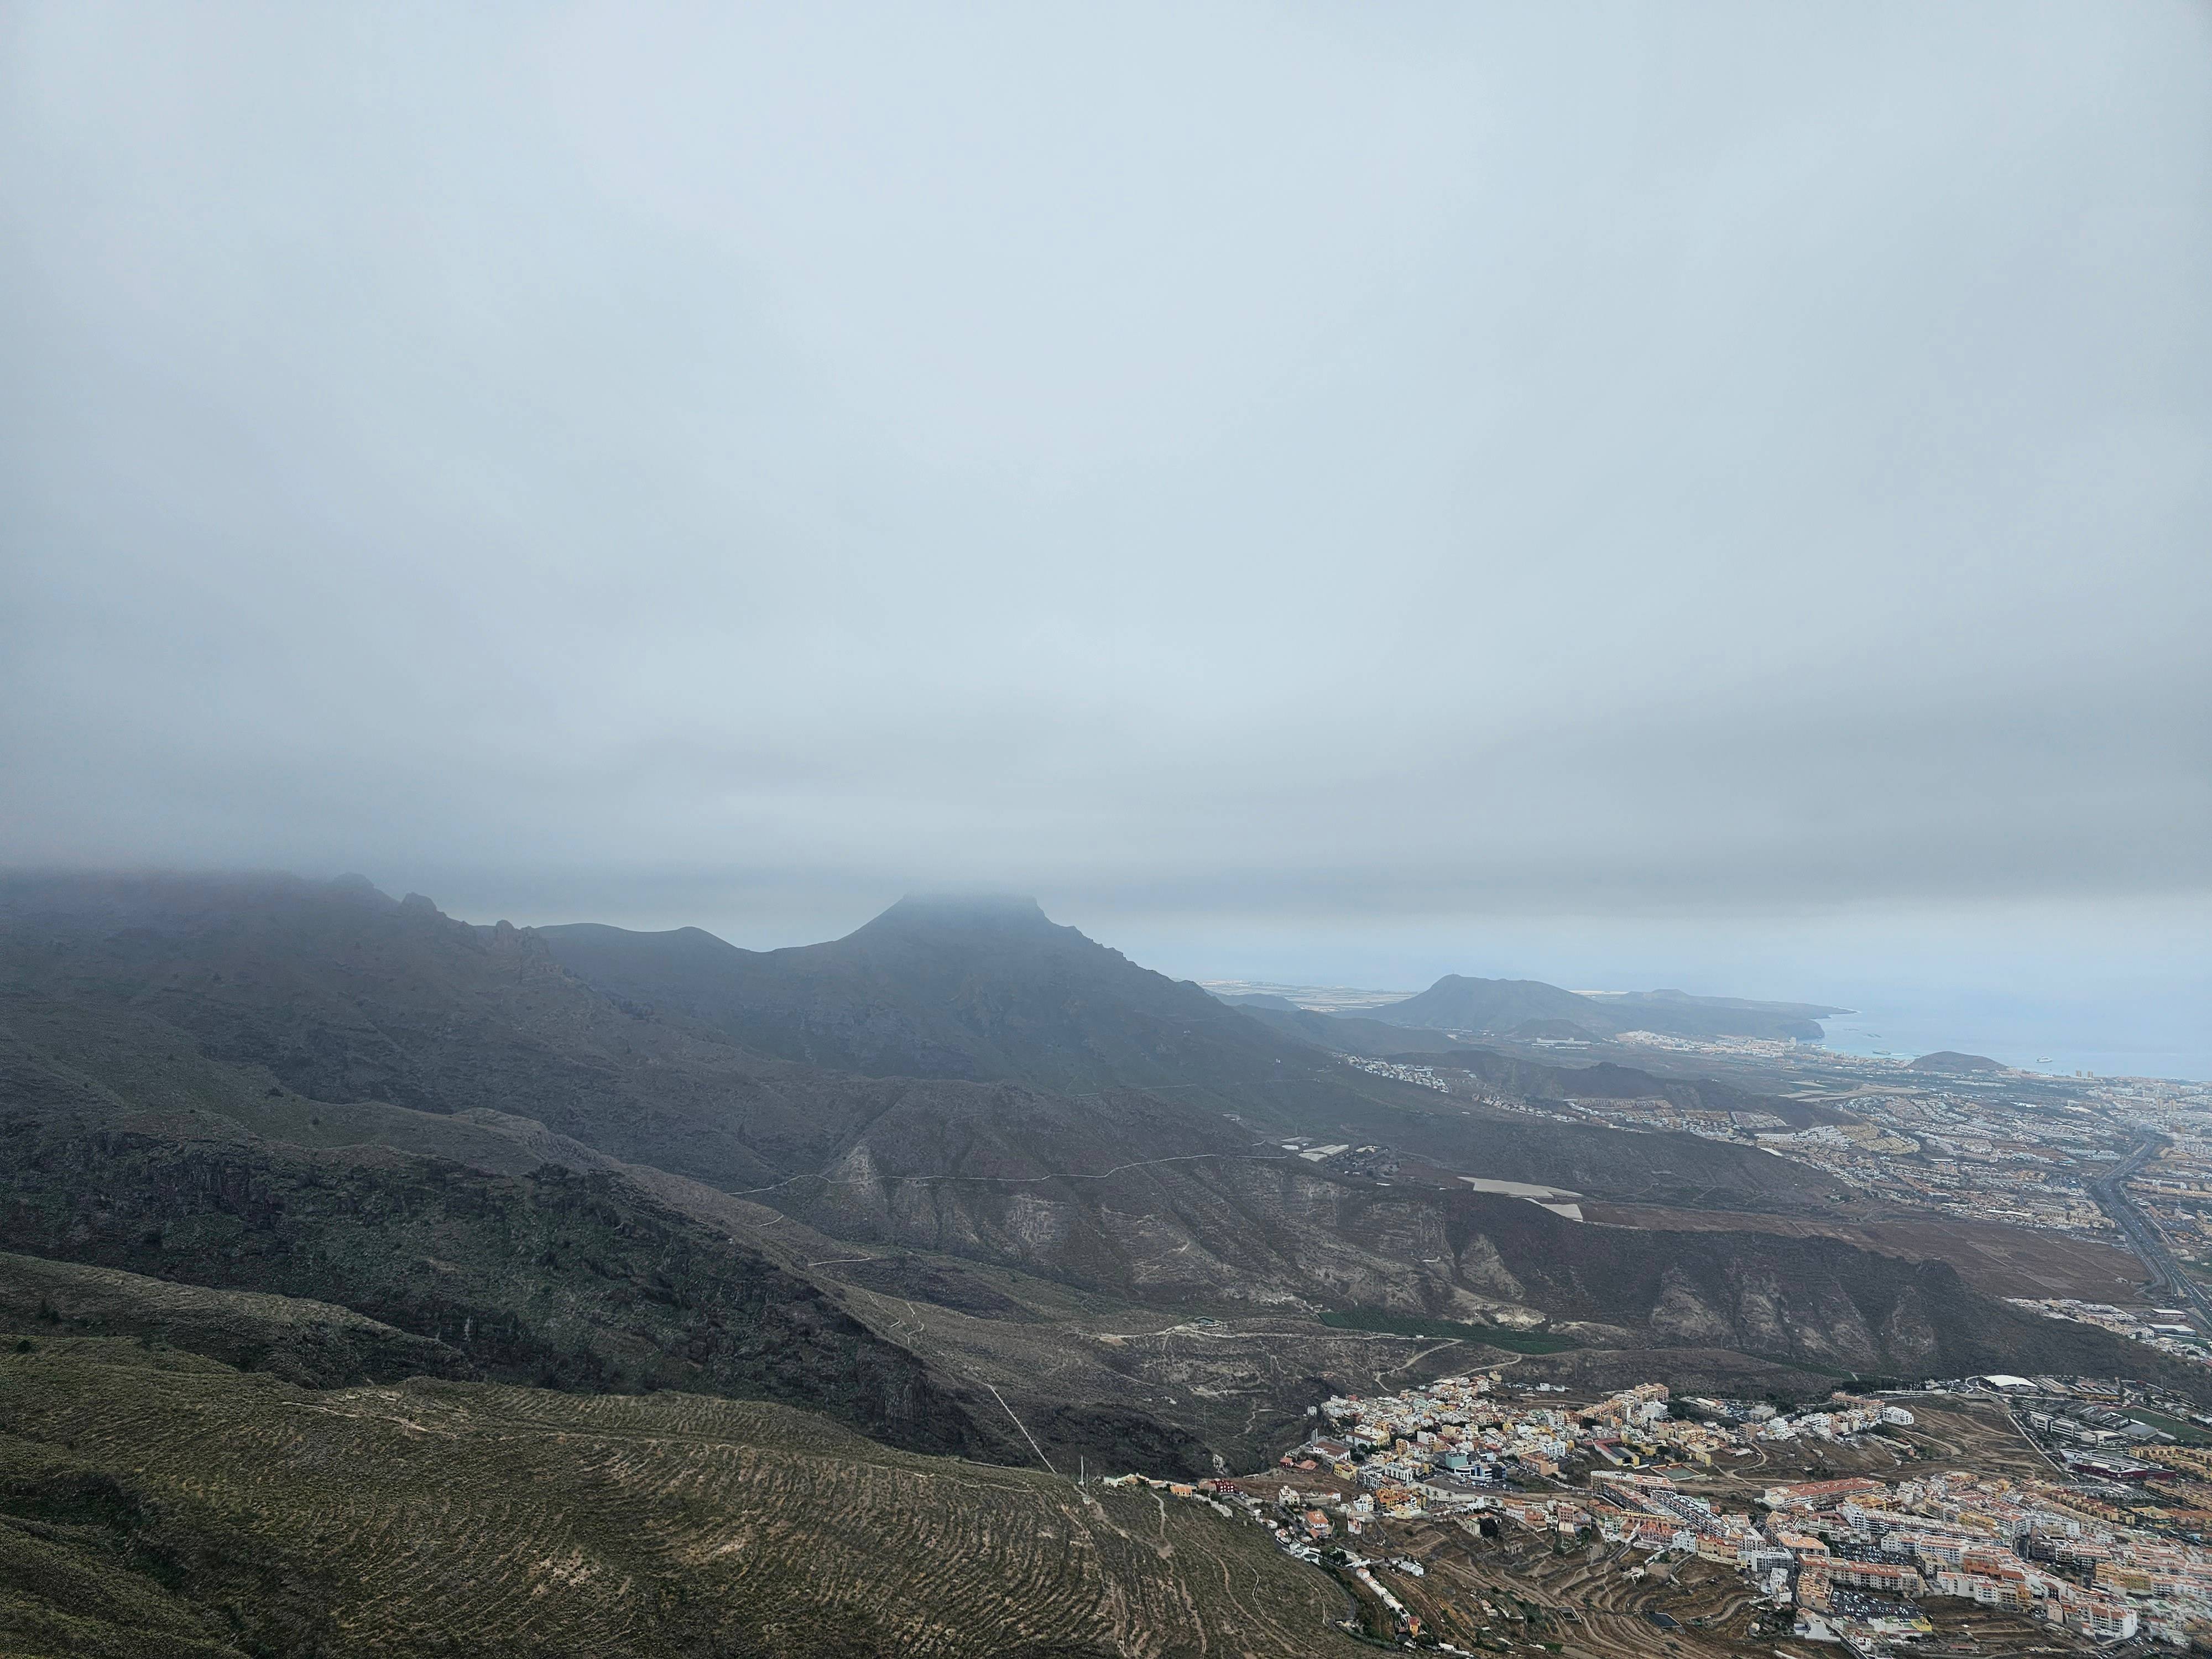 Picture from Area related to Tijoco Bajo, Montaña Carrasco, El Balito shoot by Romano Serra